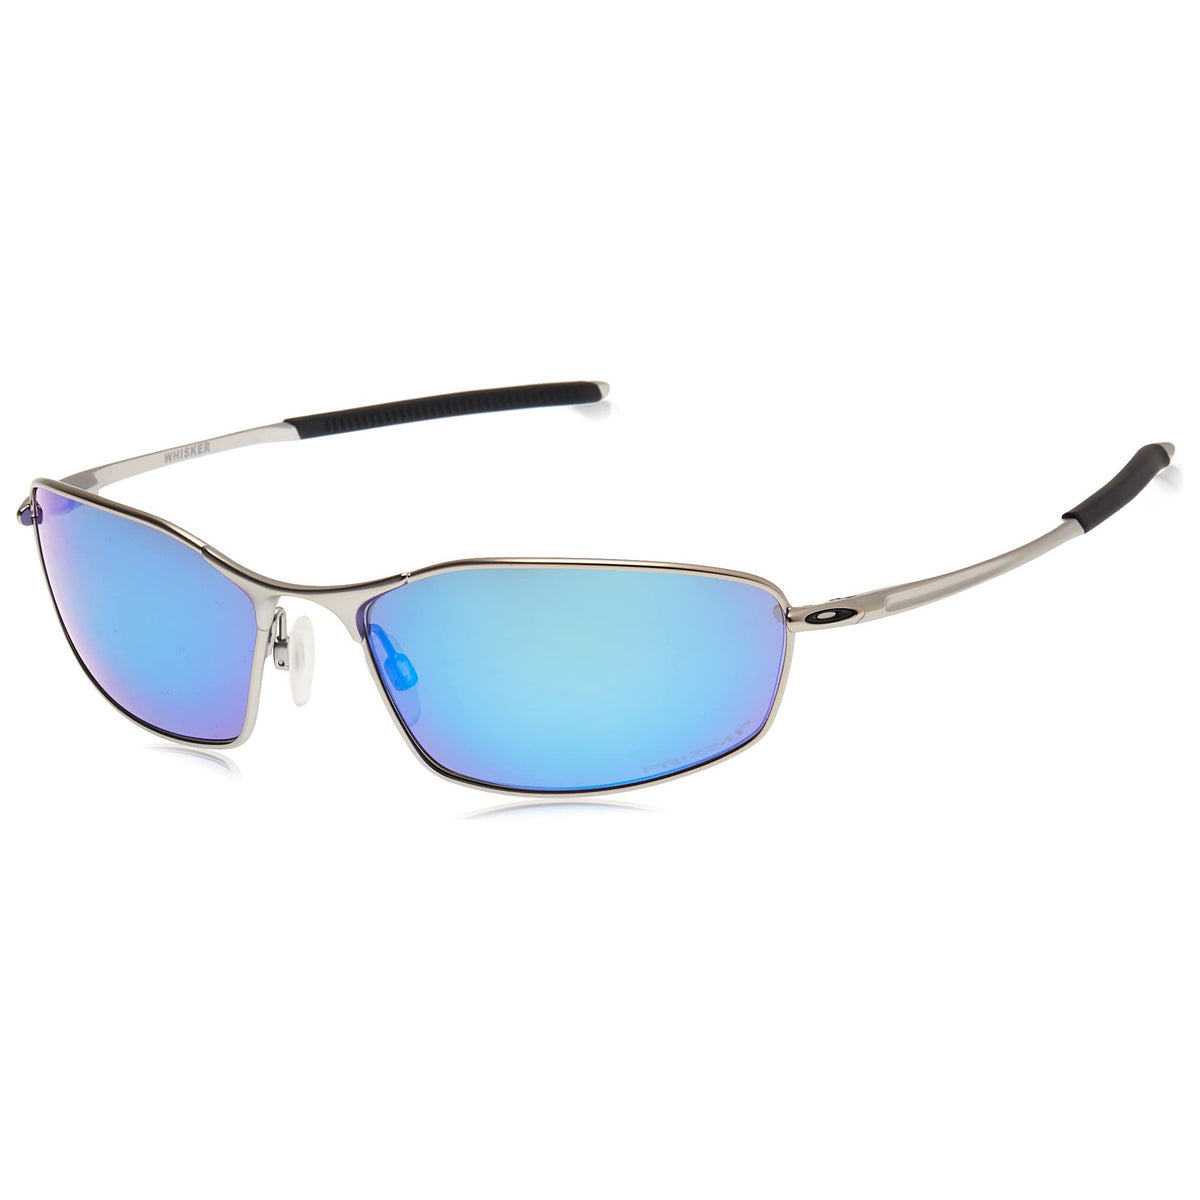 Oakley Sunglasses OAKLEY METAL Grey frame blue lenses sports glasses | eBay